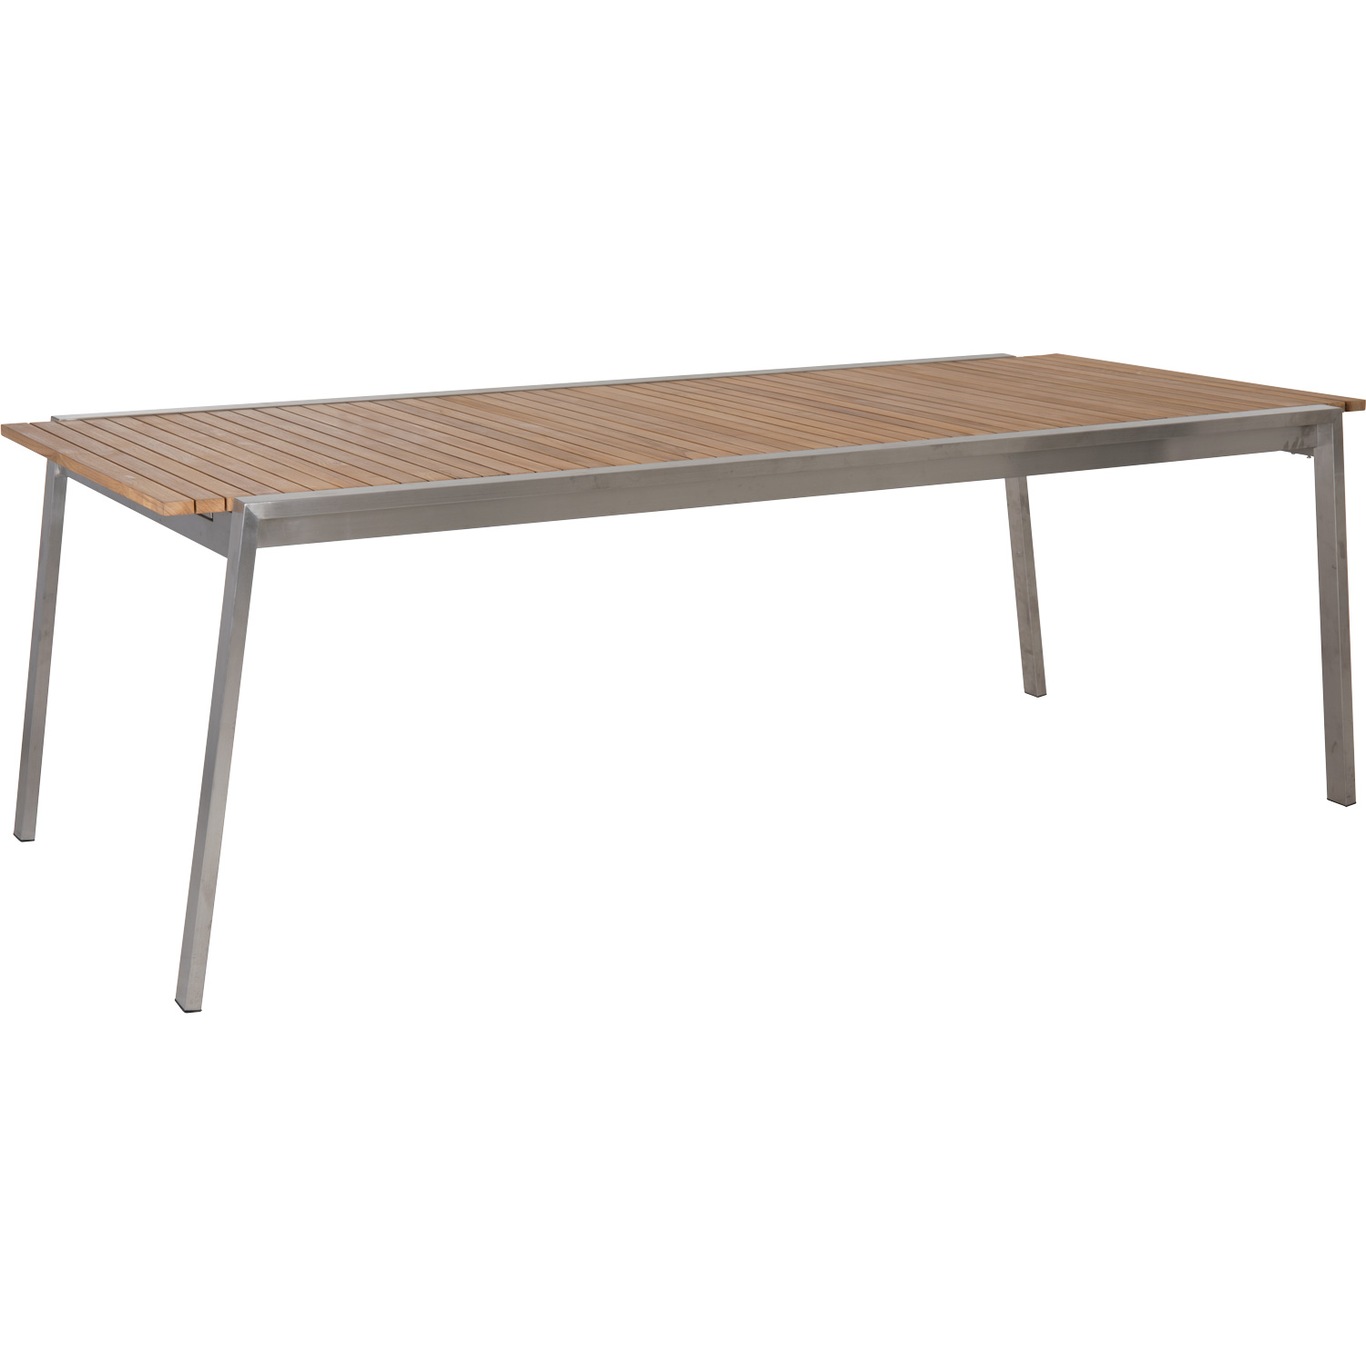 Naos Dining Table 100x220-320 cm, Stainless Steel/Teak